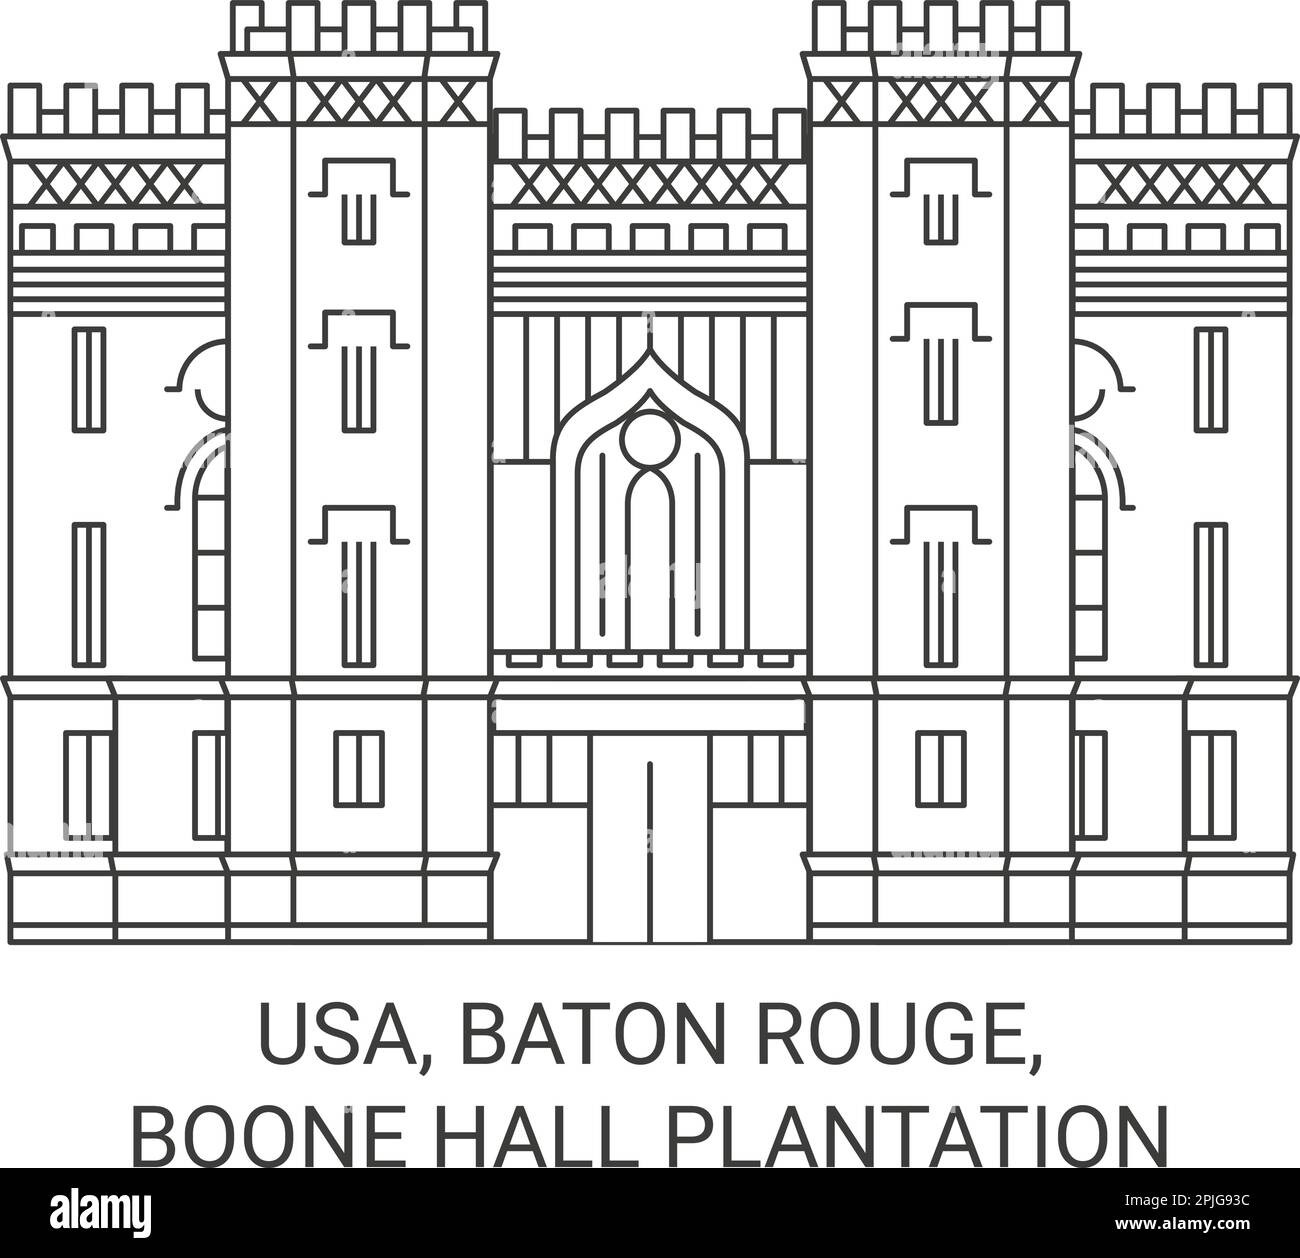 Usa, Baton Rouge, Boone Hall Plantation travel landmark vector illustration Stock Vector